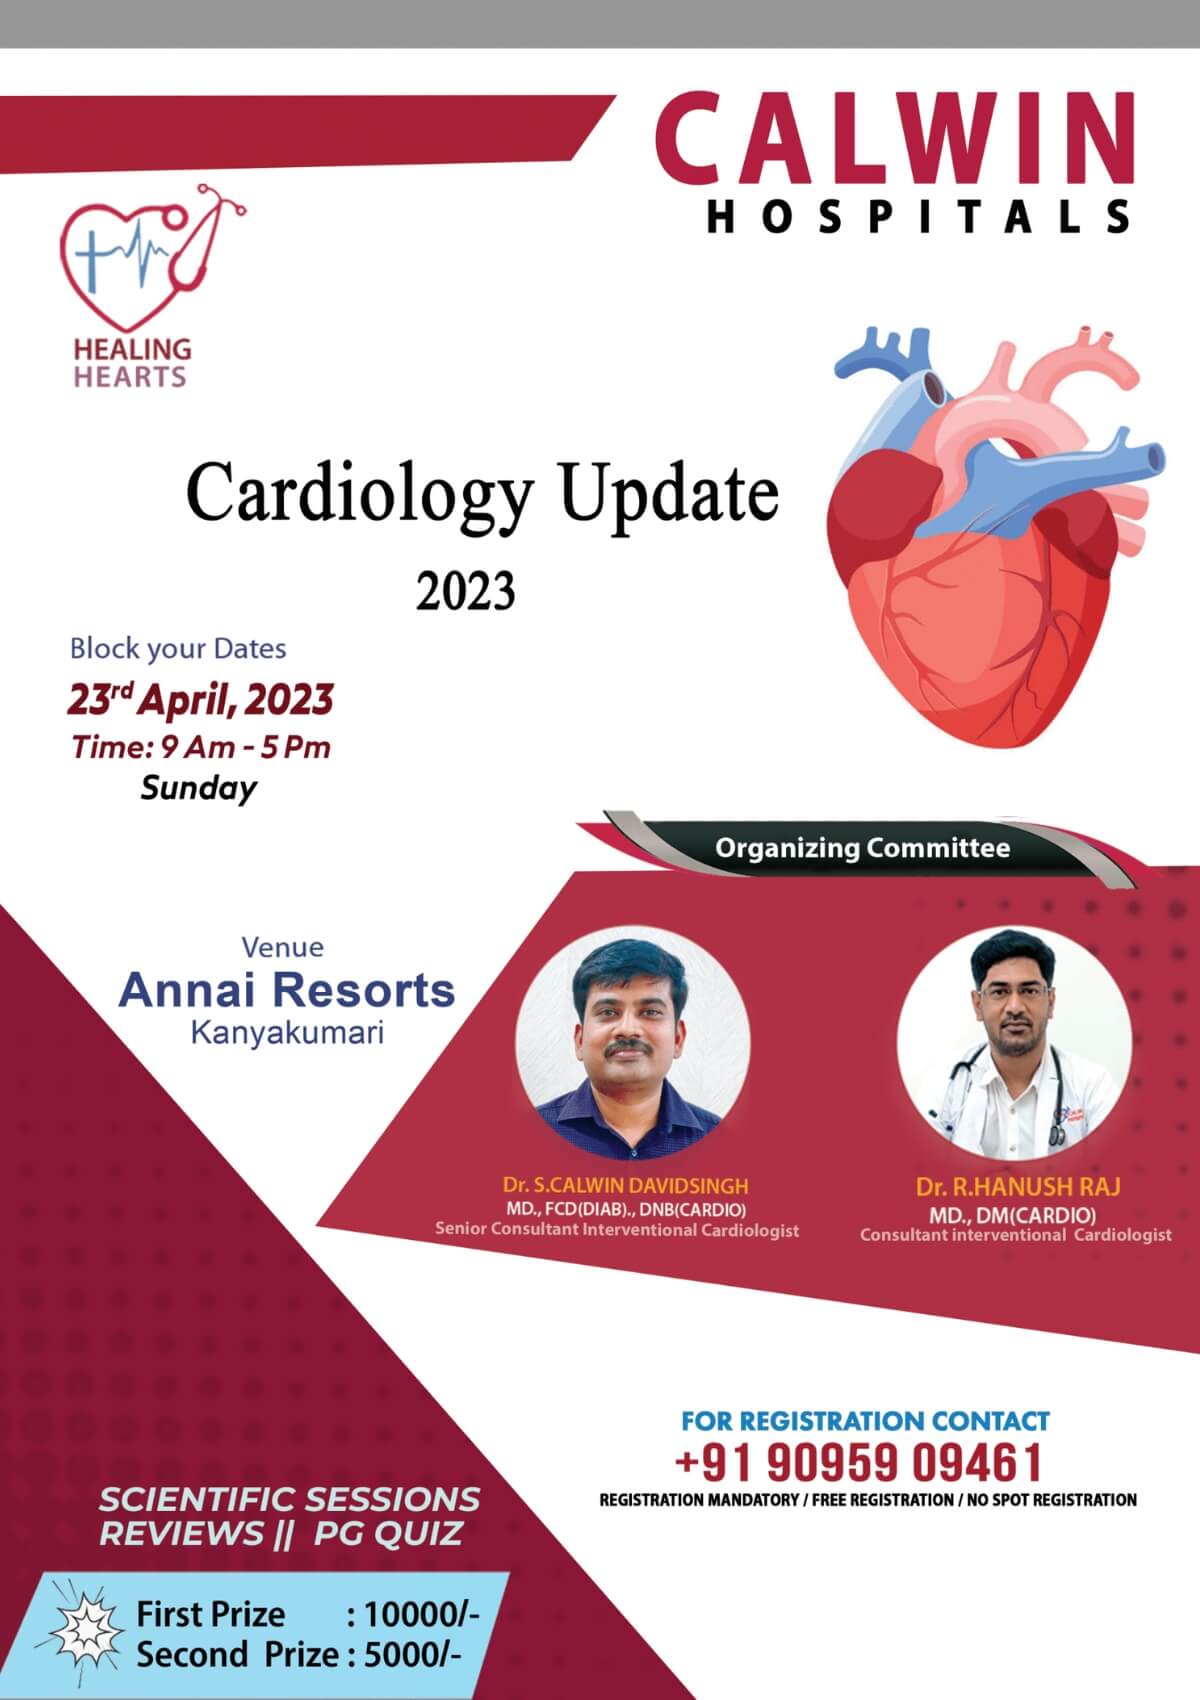 Calwin Hospitals Cardiology Update – 2023